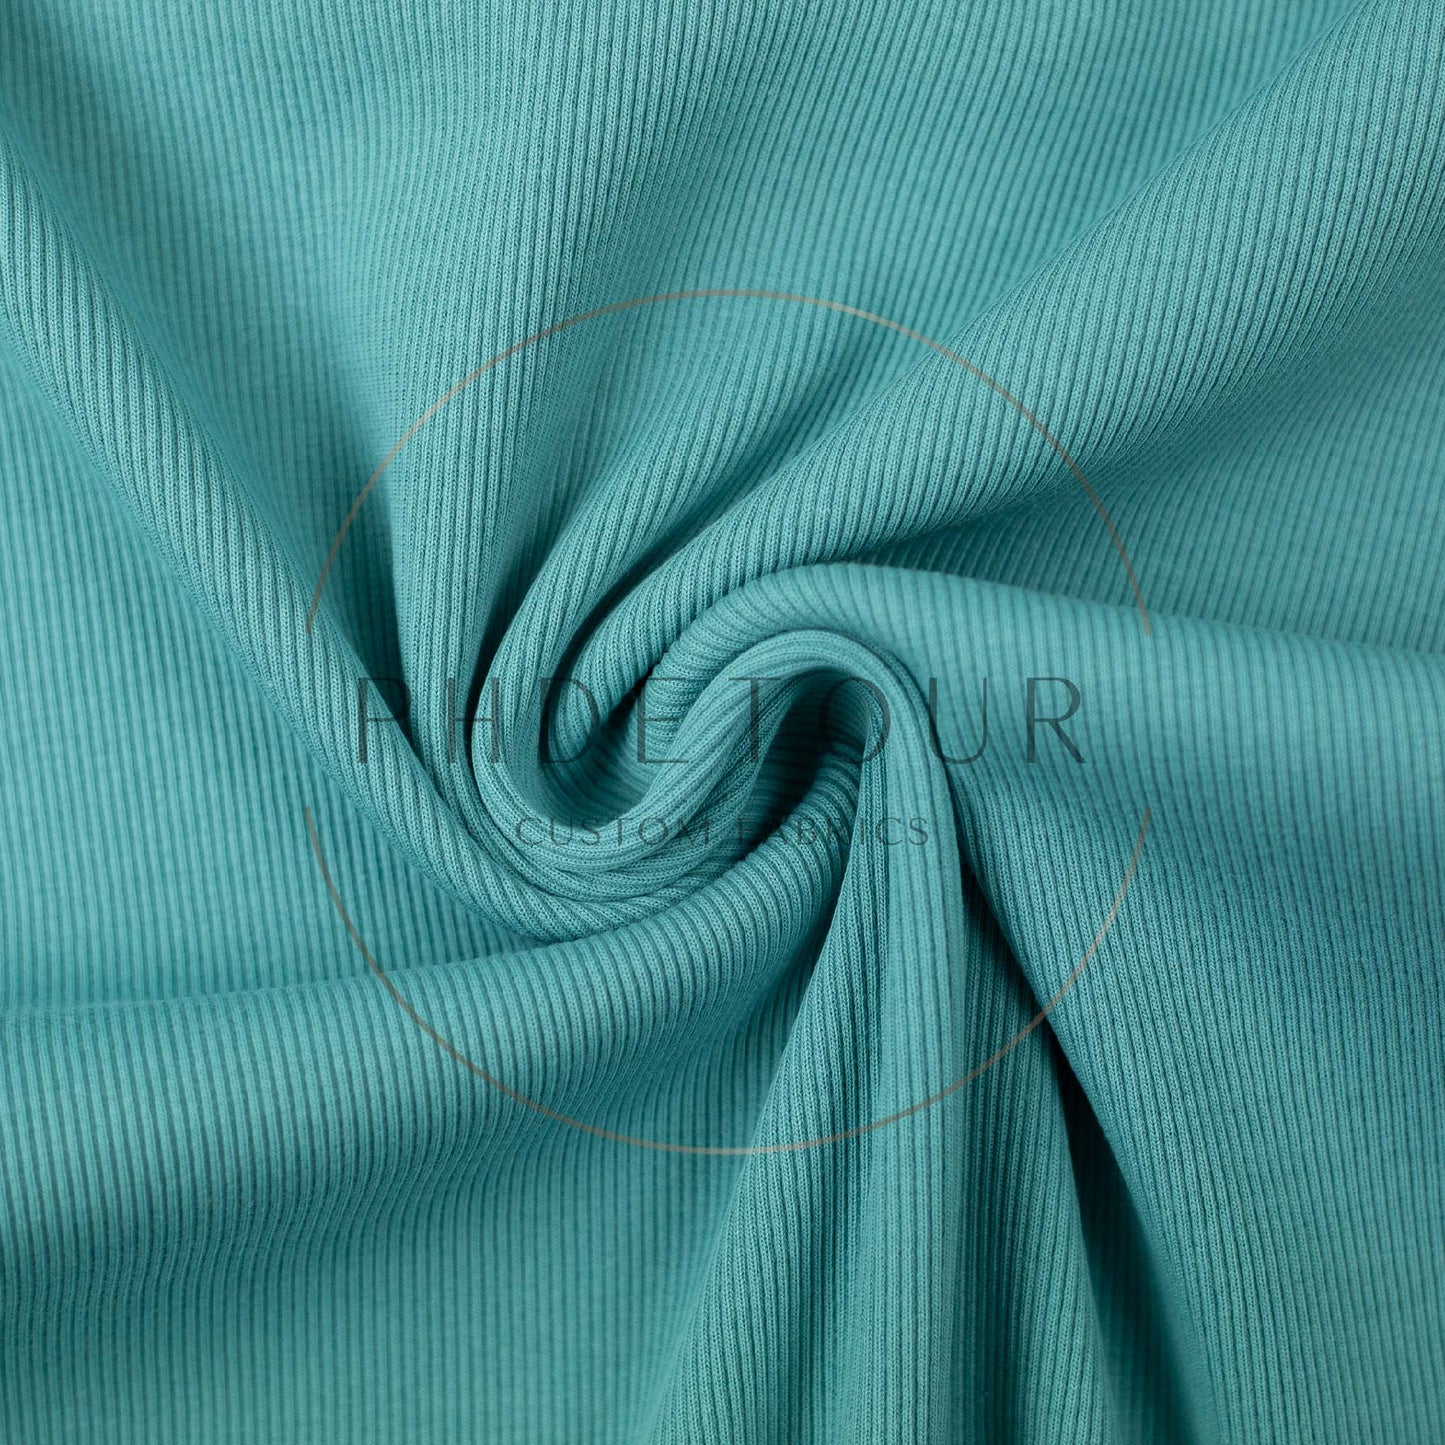 Wholesale European 2x1 Sweatshirt Ribbing - 263 - Cool Mint